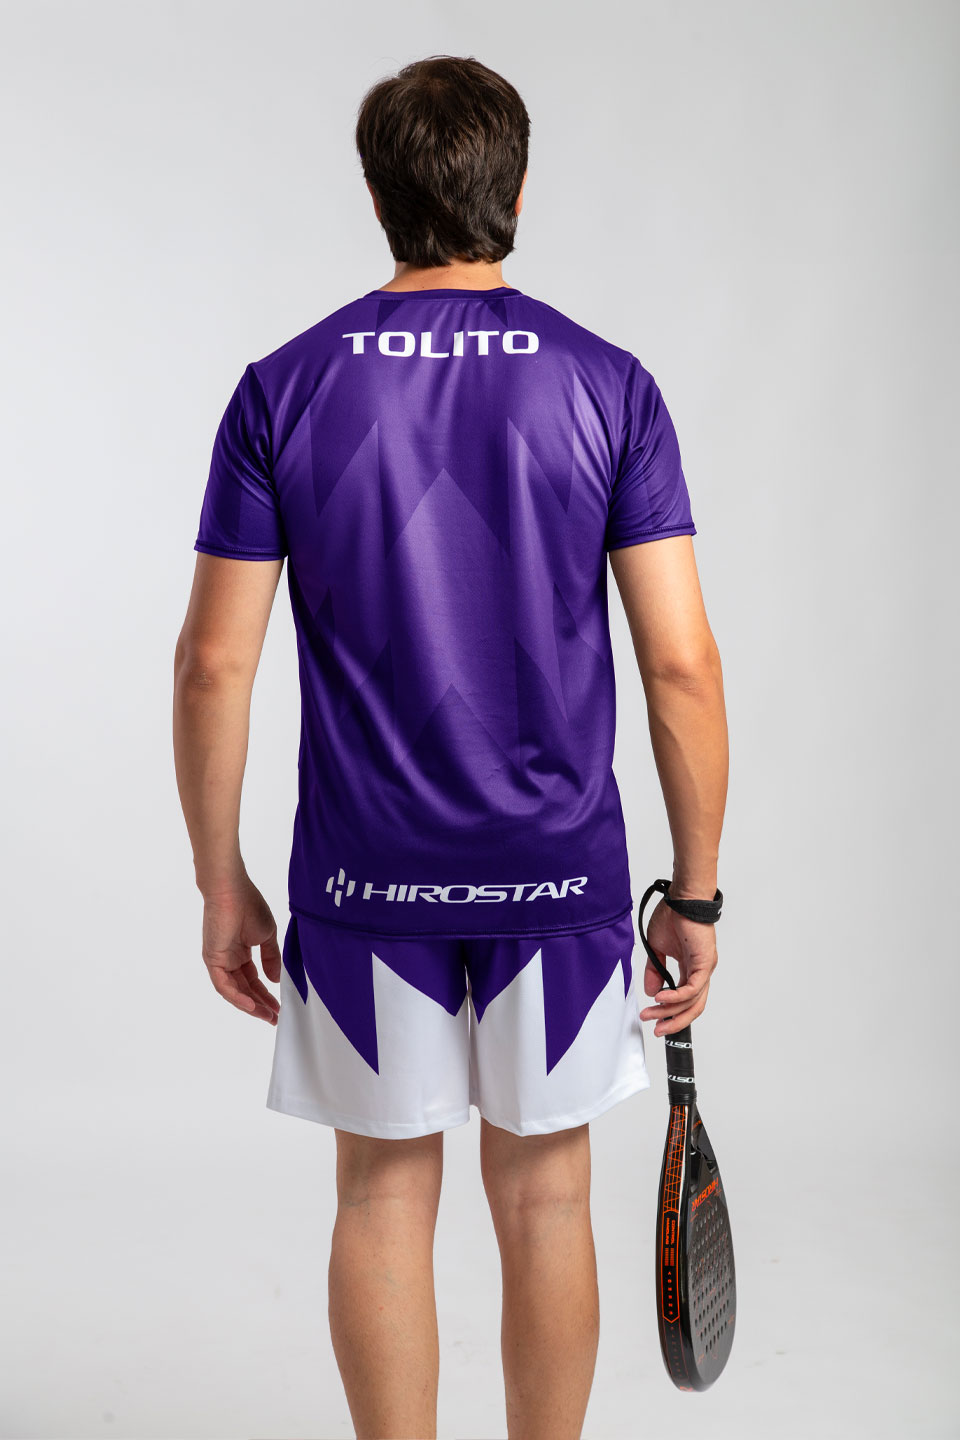 t-shirt-padel-hirostar-tolito-aguirre-official-viola15